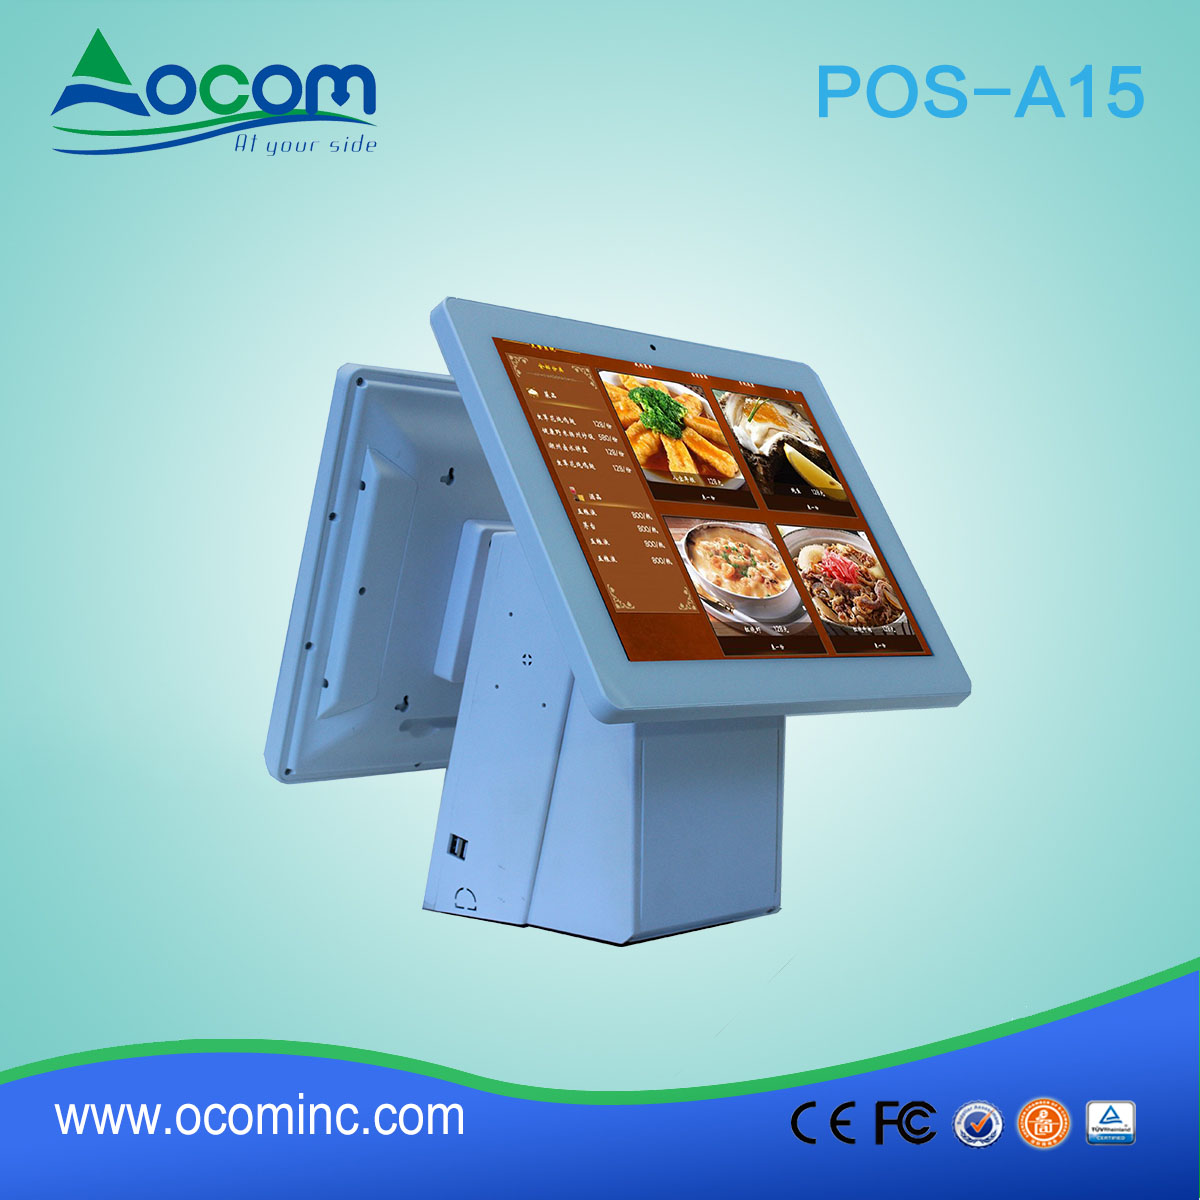 POS-A15 Electronic Cash Register/POS PC Touch Screen alle in einem mit Drucker